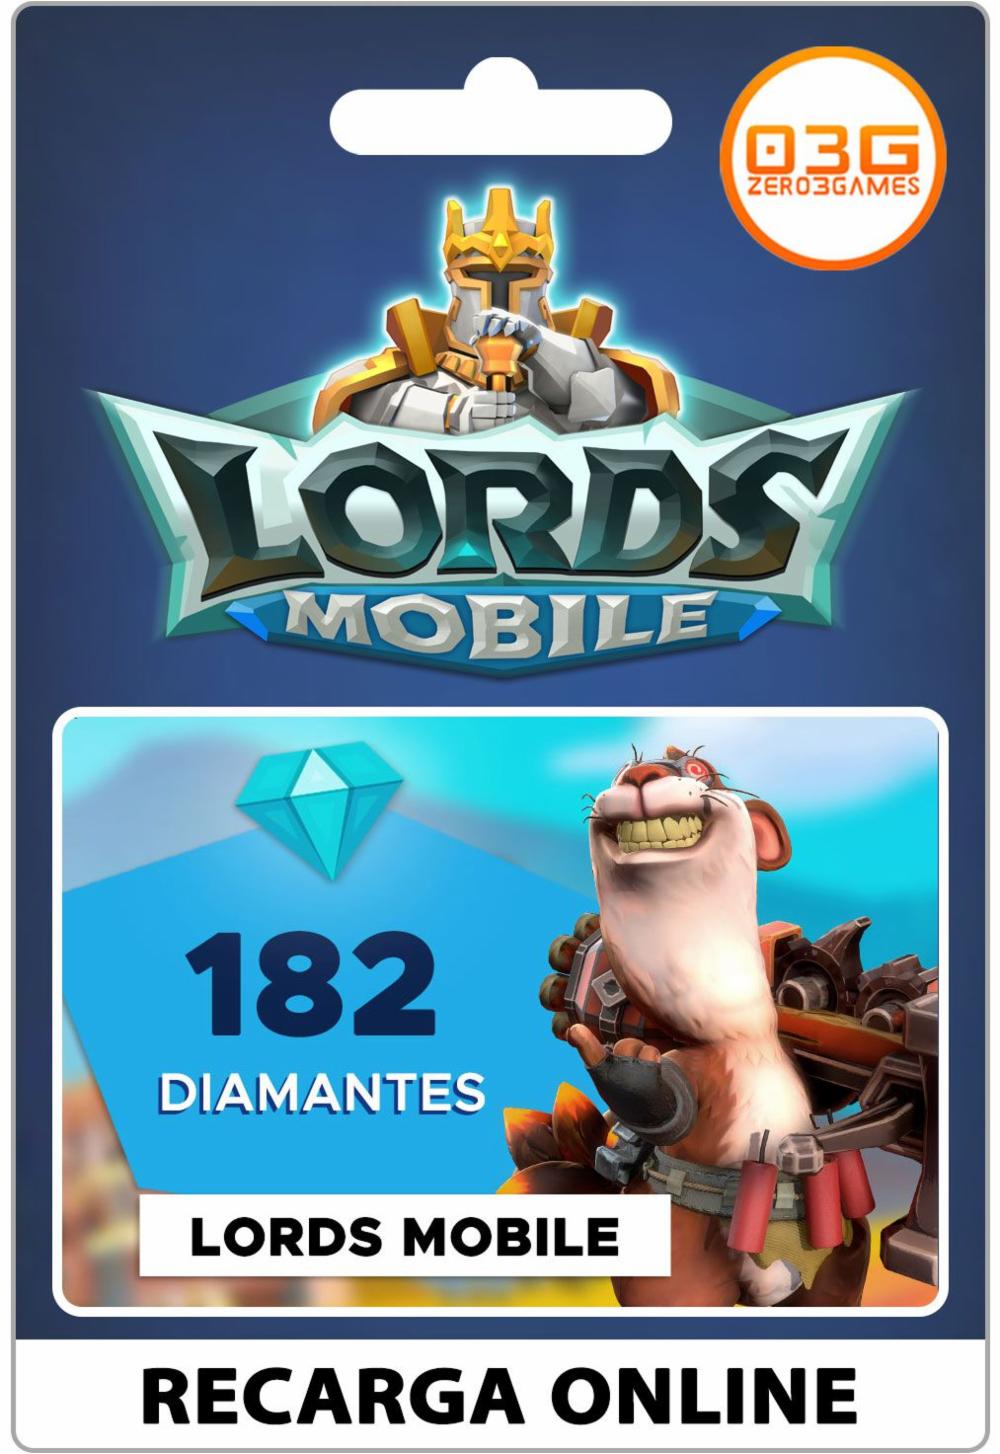 Compre Lords Mobile - 182 Diamantes na Loja Oliz - Entrega imediata!